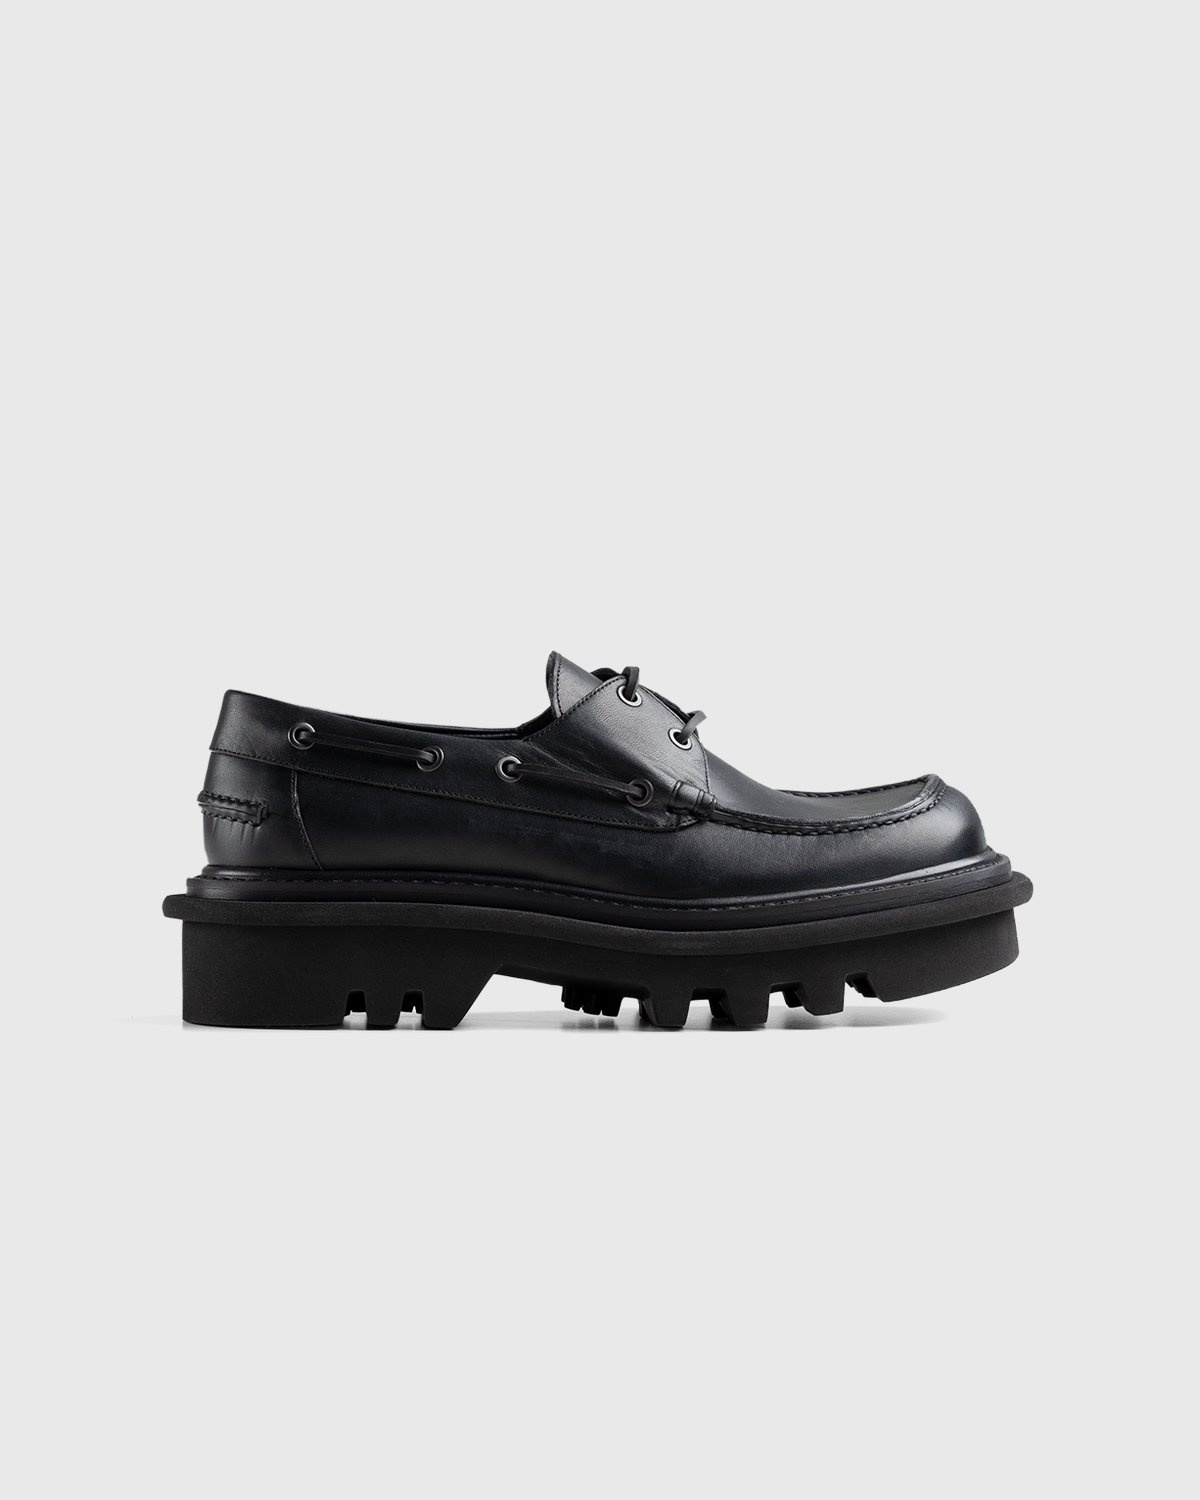 Dries van Noten – Leather Boat Shoe Black - Boat Shoes & Moccasins - Black - Image 1